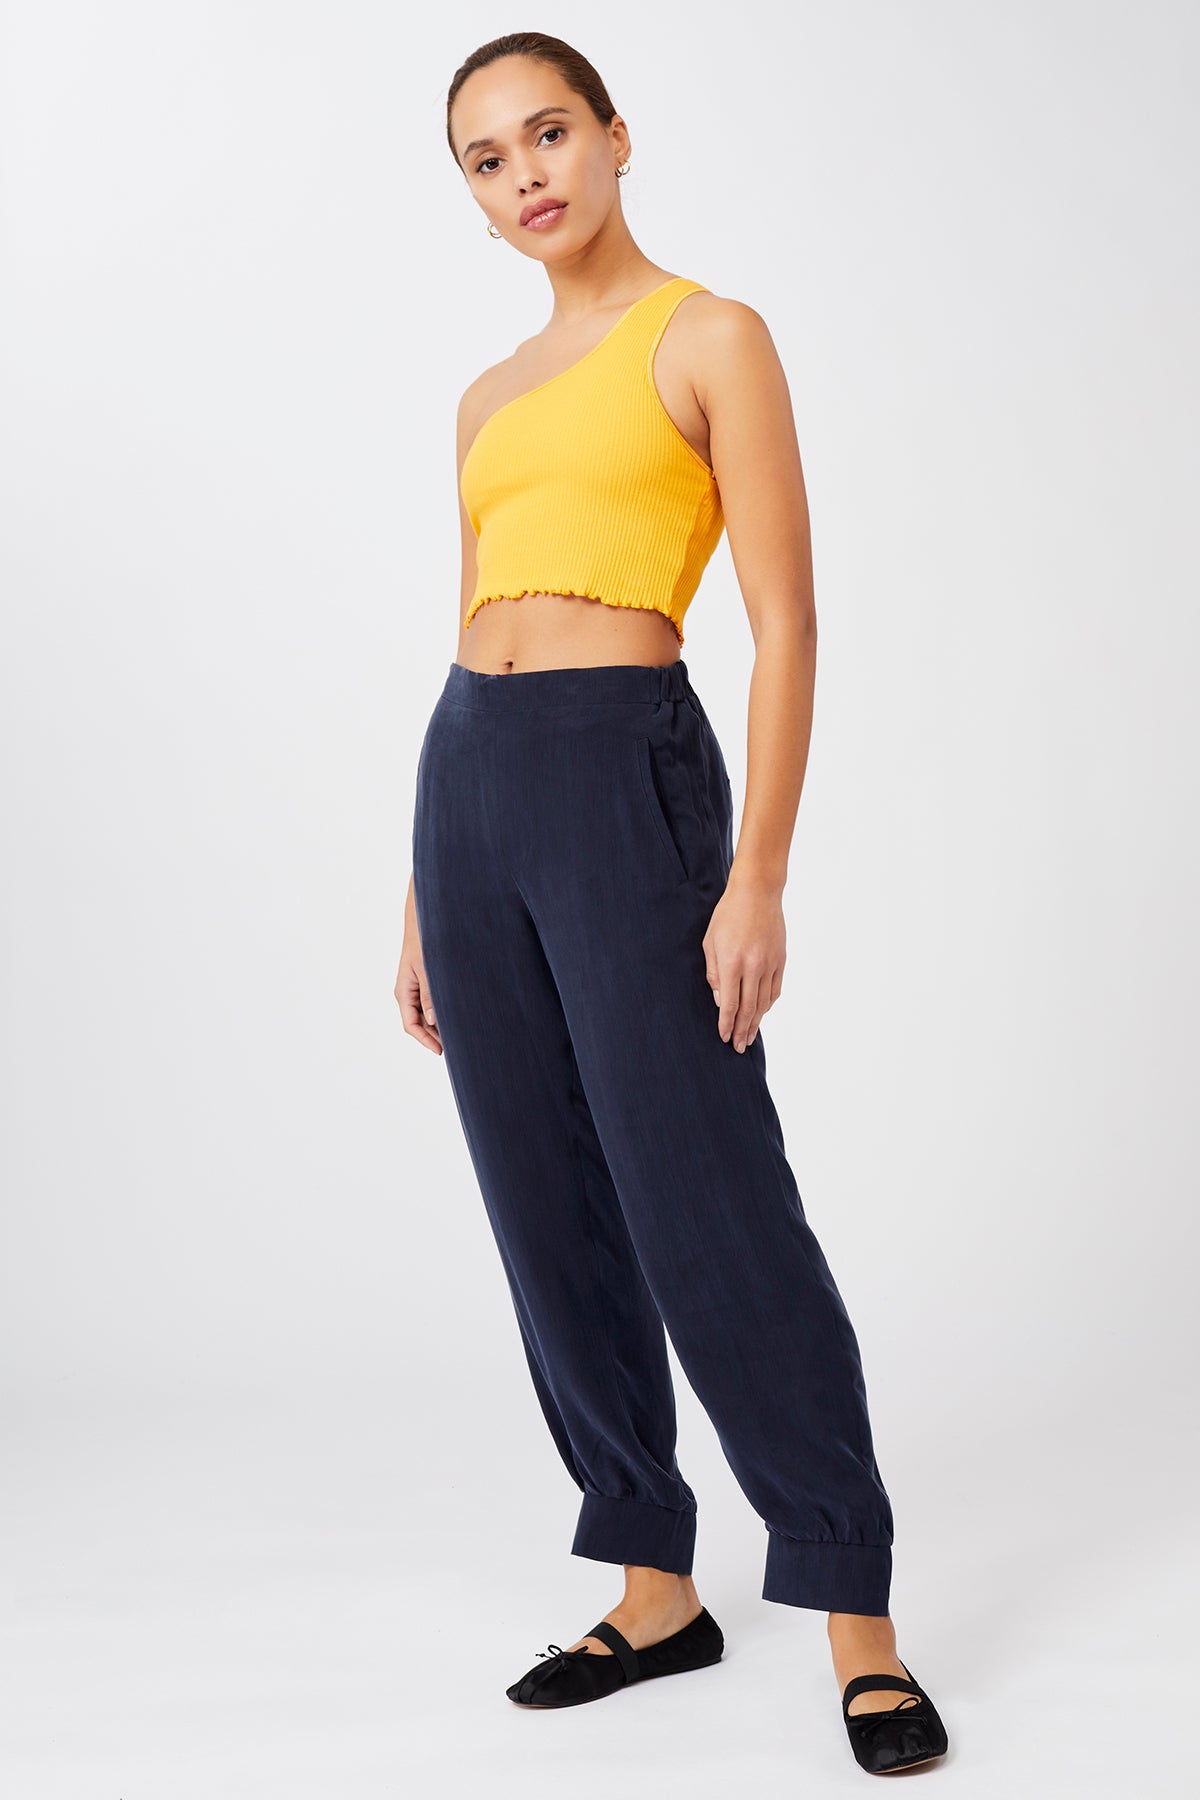 Mandala Yoga Bra Gelb Outfit Front - One Shoulder Top